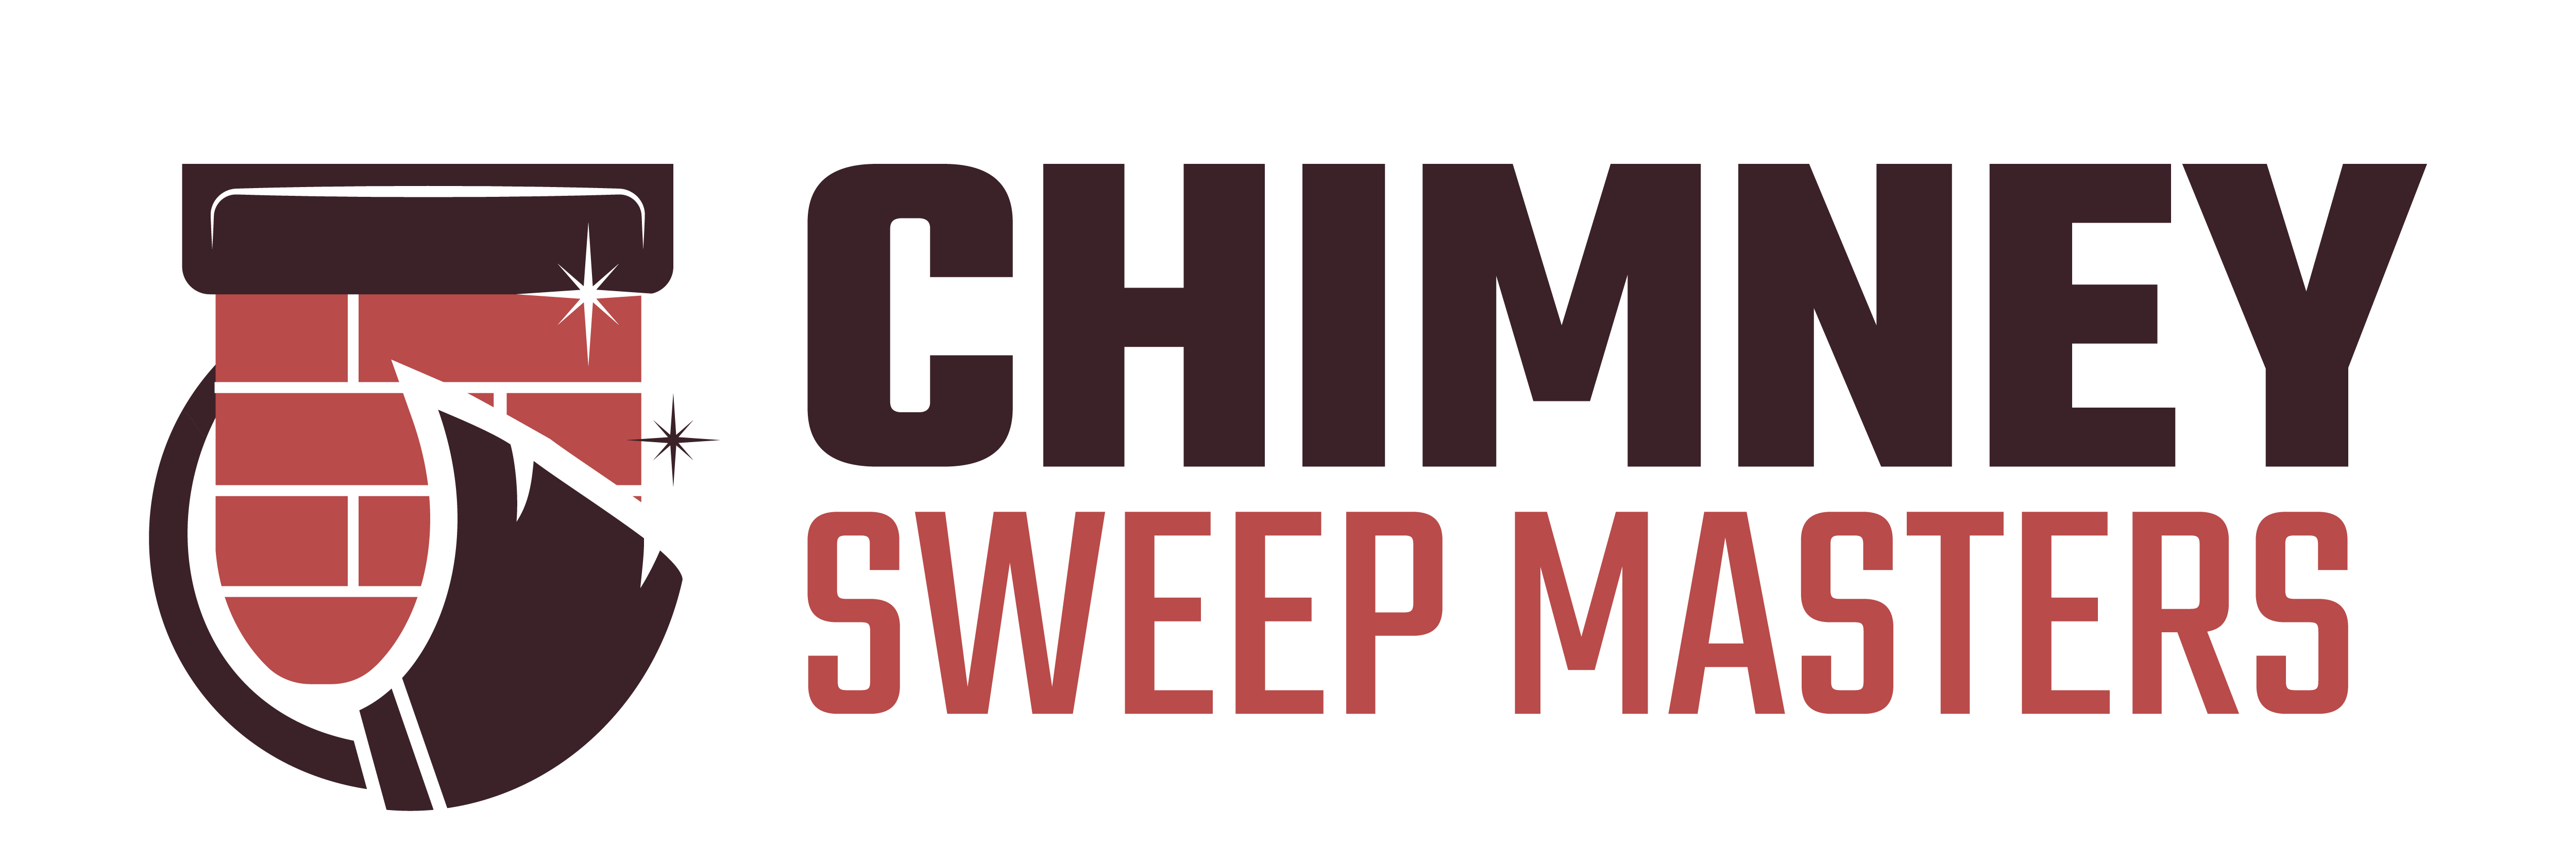 Chimney Sweep Masters Bell Gardens Logo